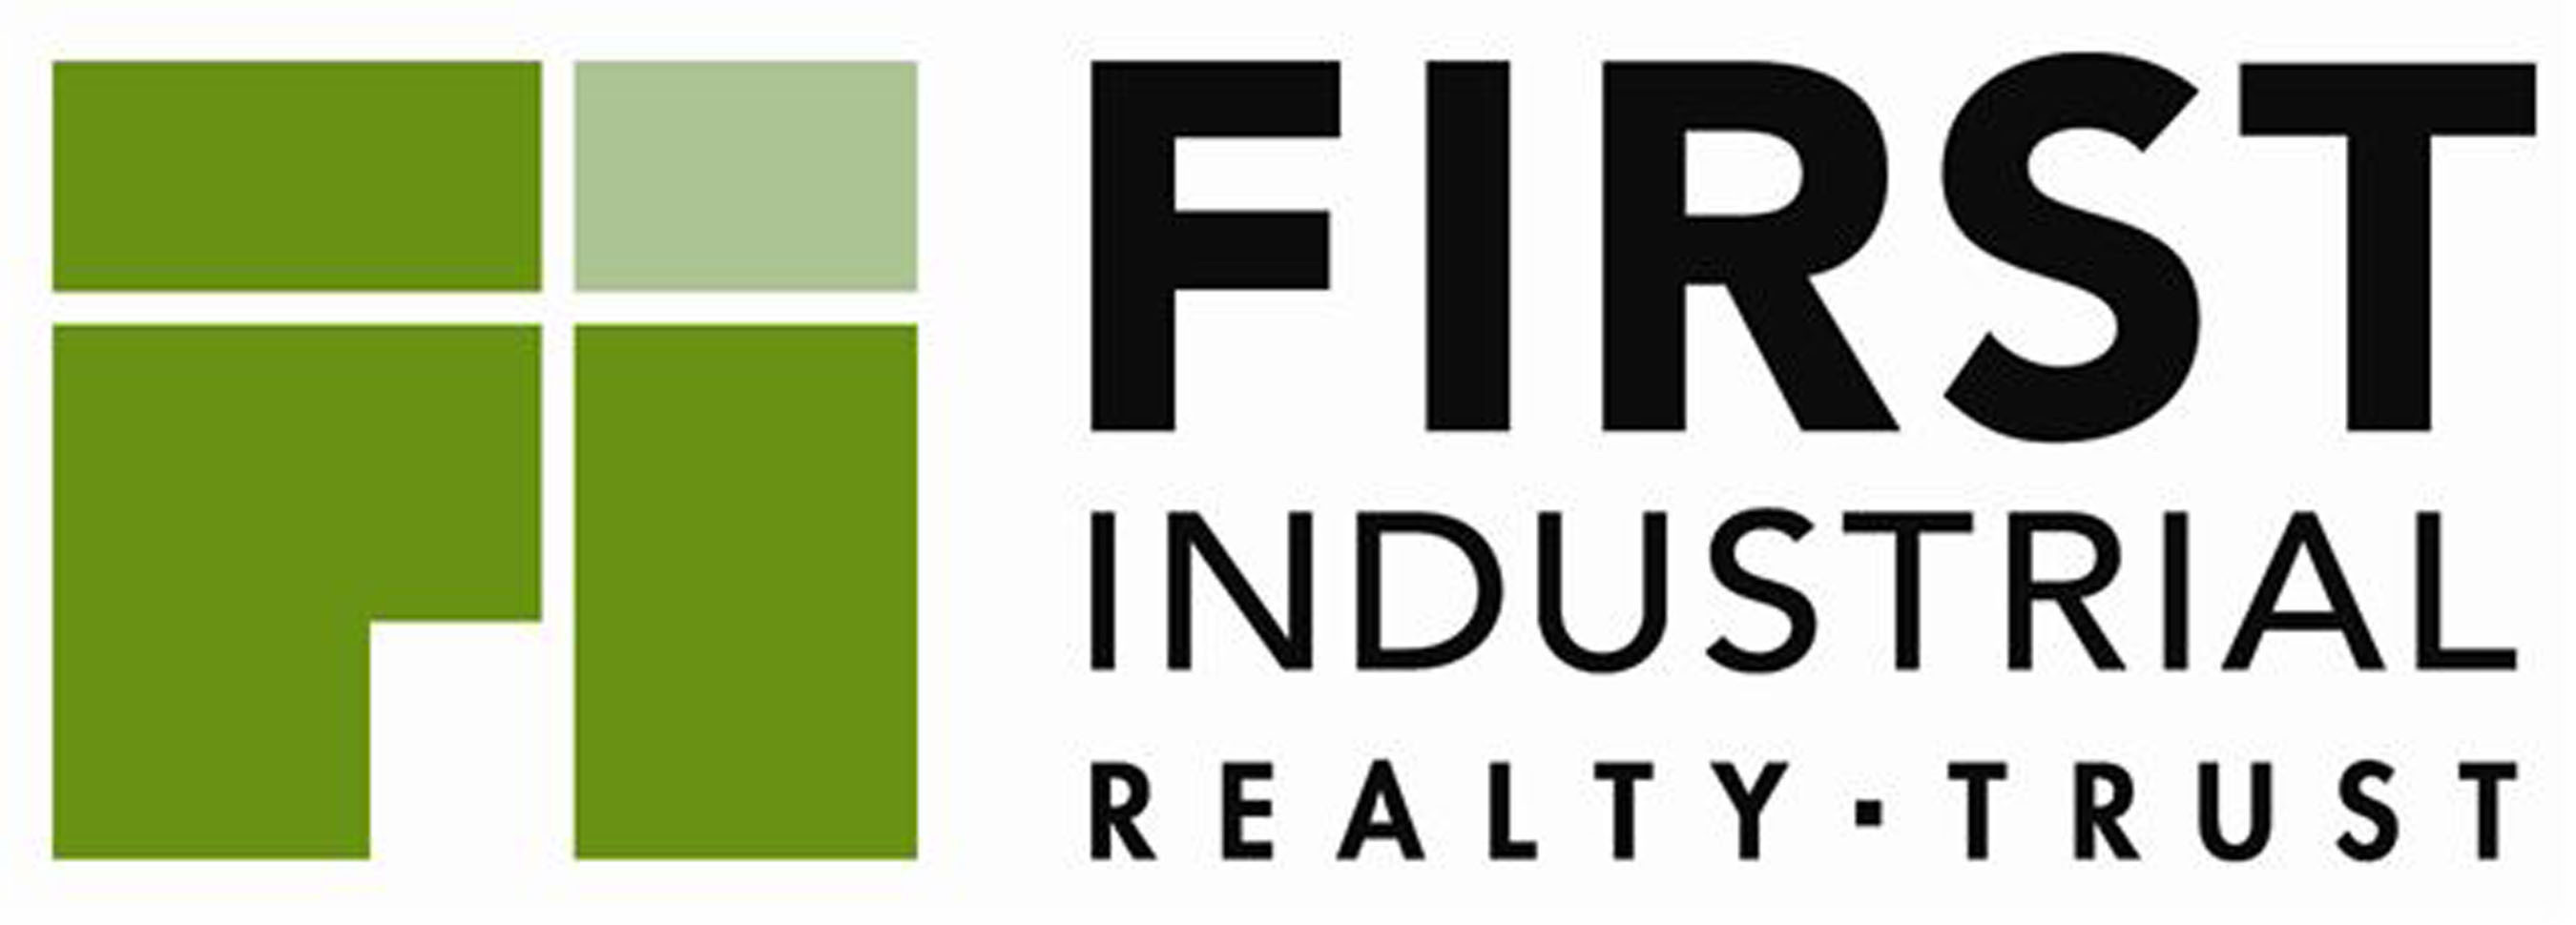 First Industrial Realty Trust logo. (PRNewsFoto/First Industrial Realty Trust) (PRNewsFoto/)